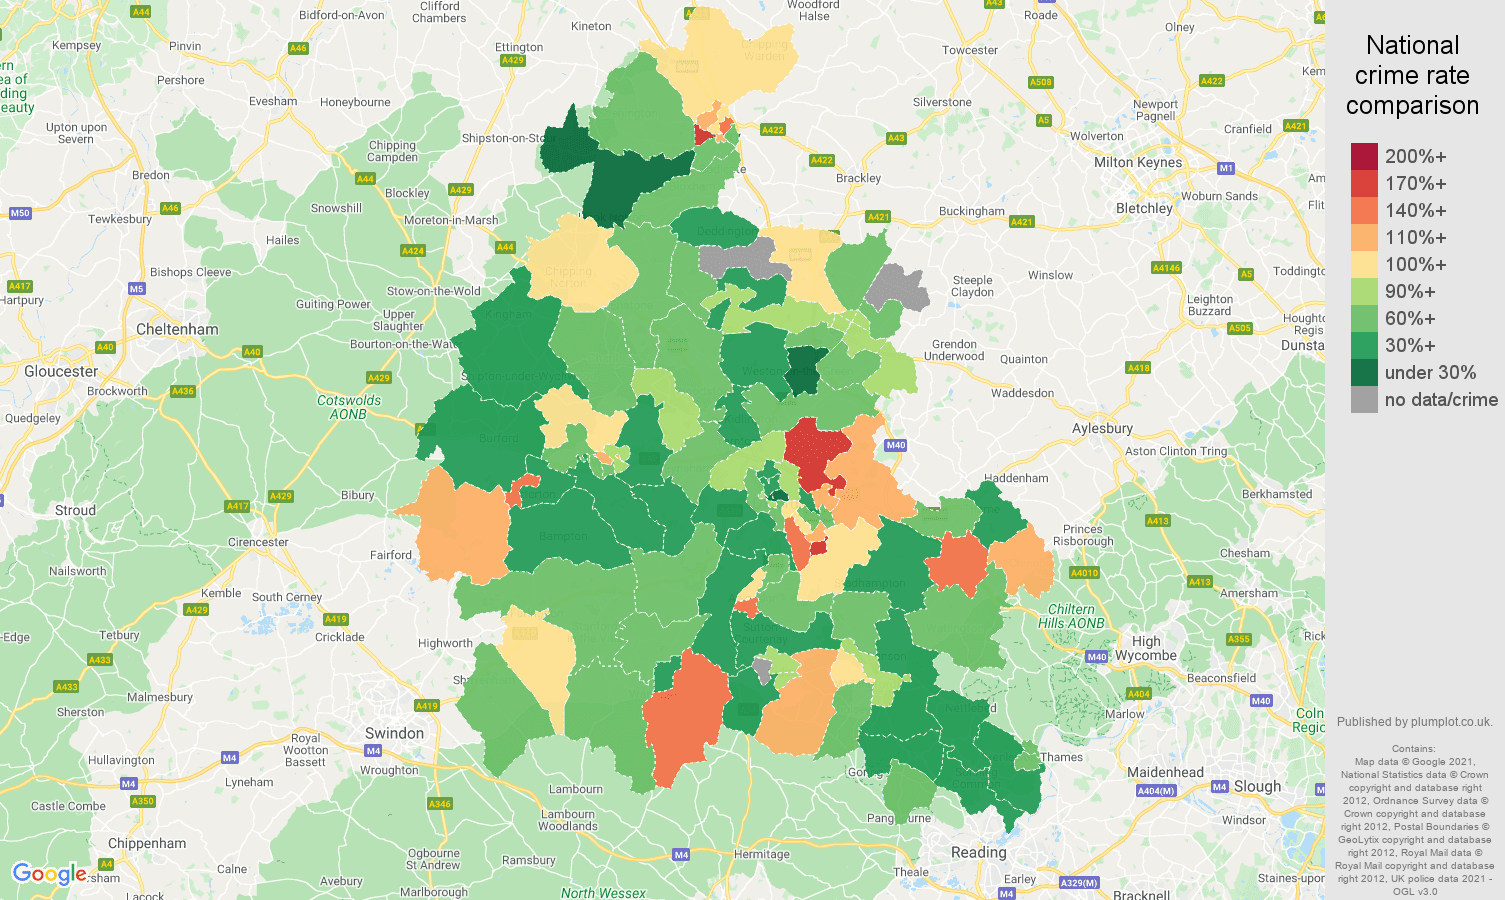 Oxfordshire criminal damage and arson crime rate comparison map